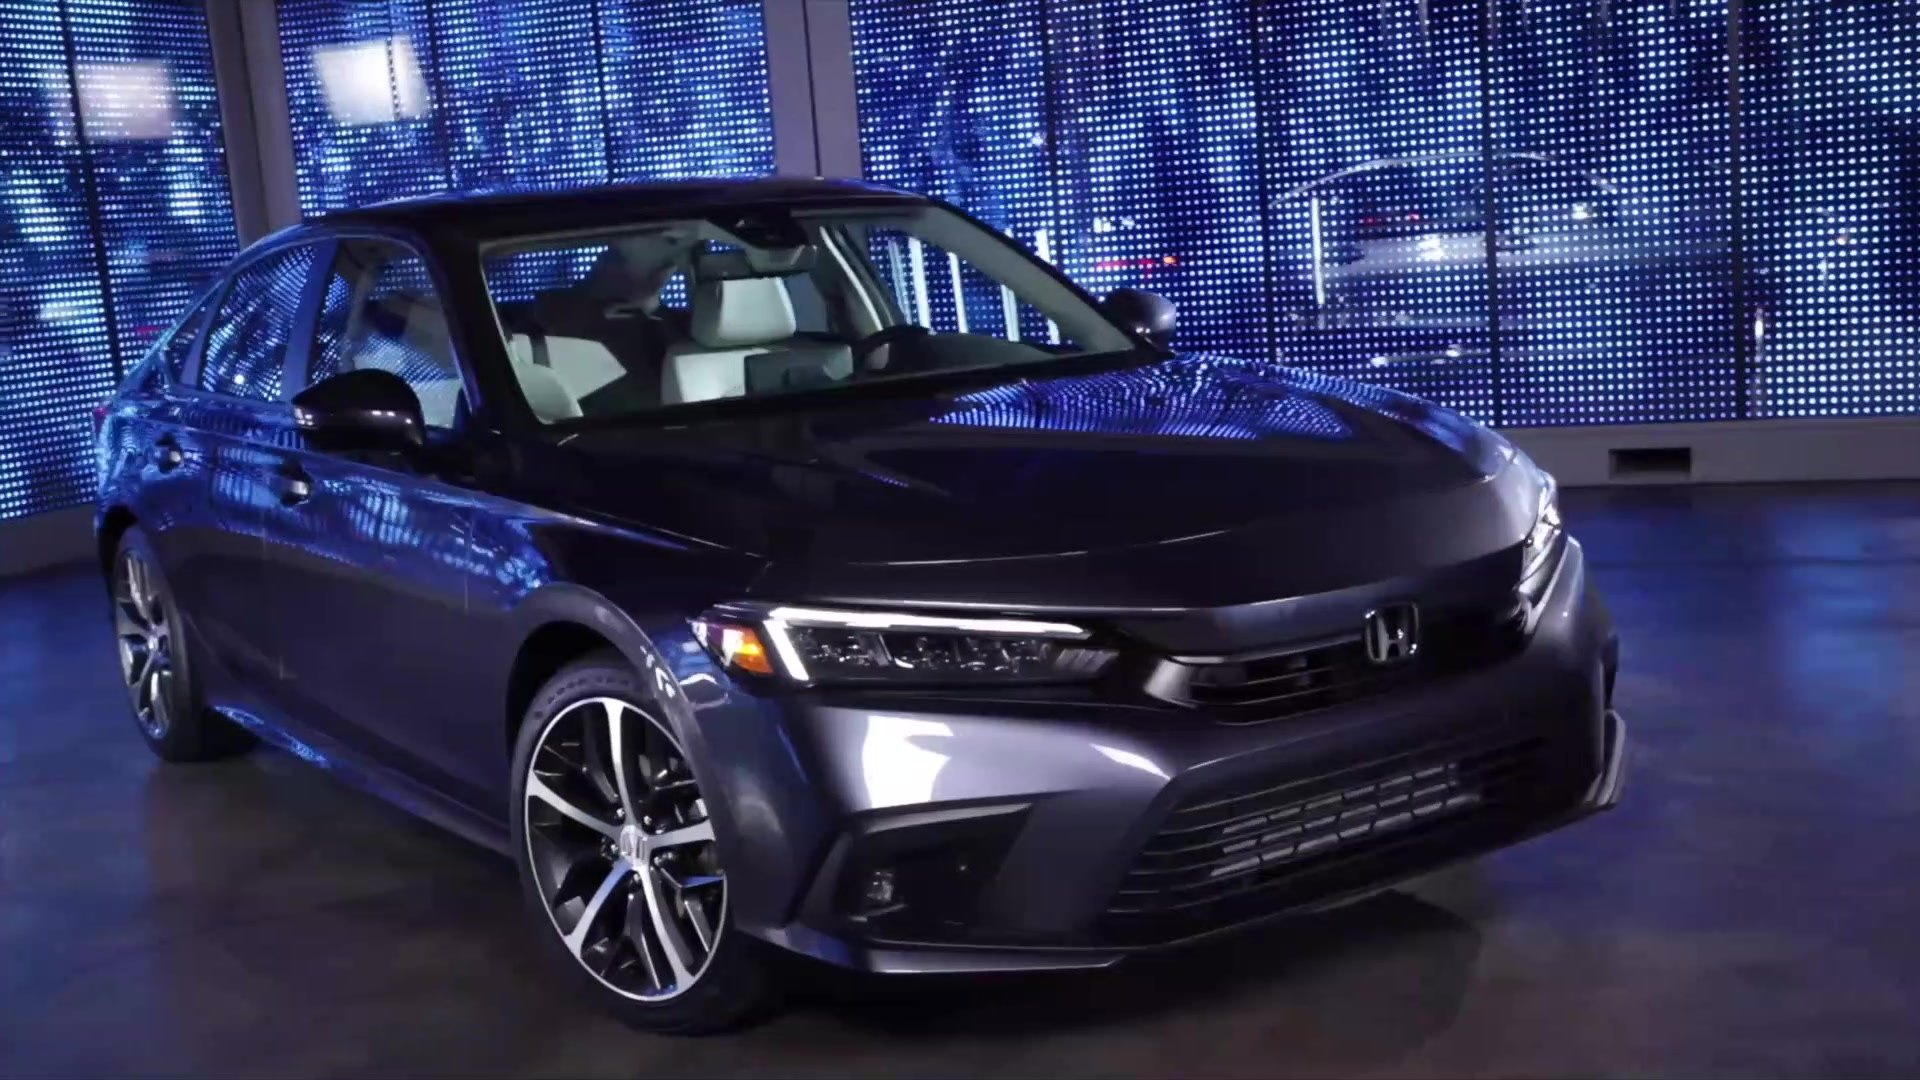 2022 Honda Civic Touring Design in Meteorite Gray - video Dailymotion